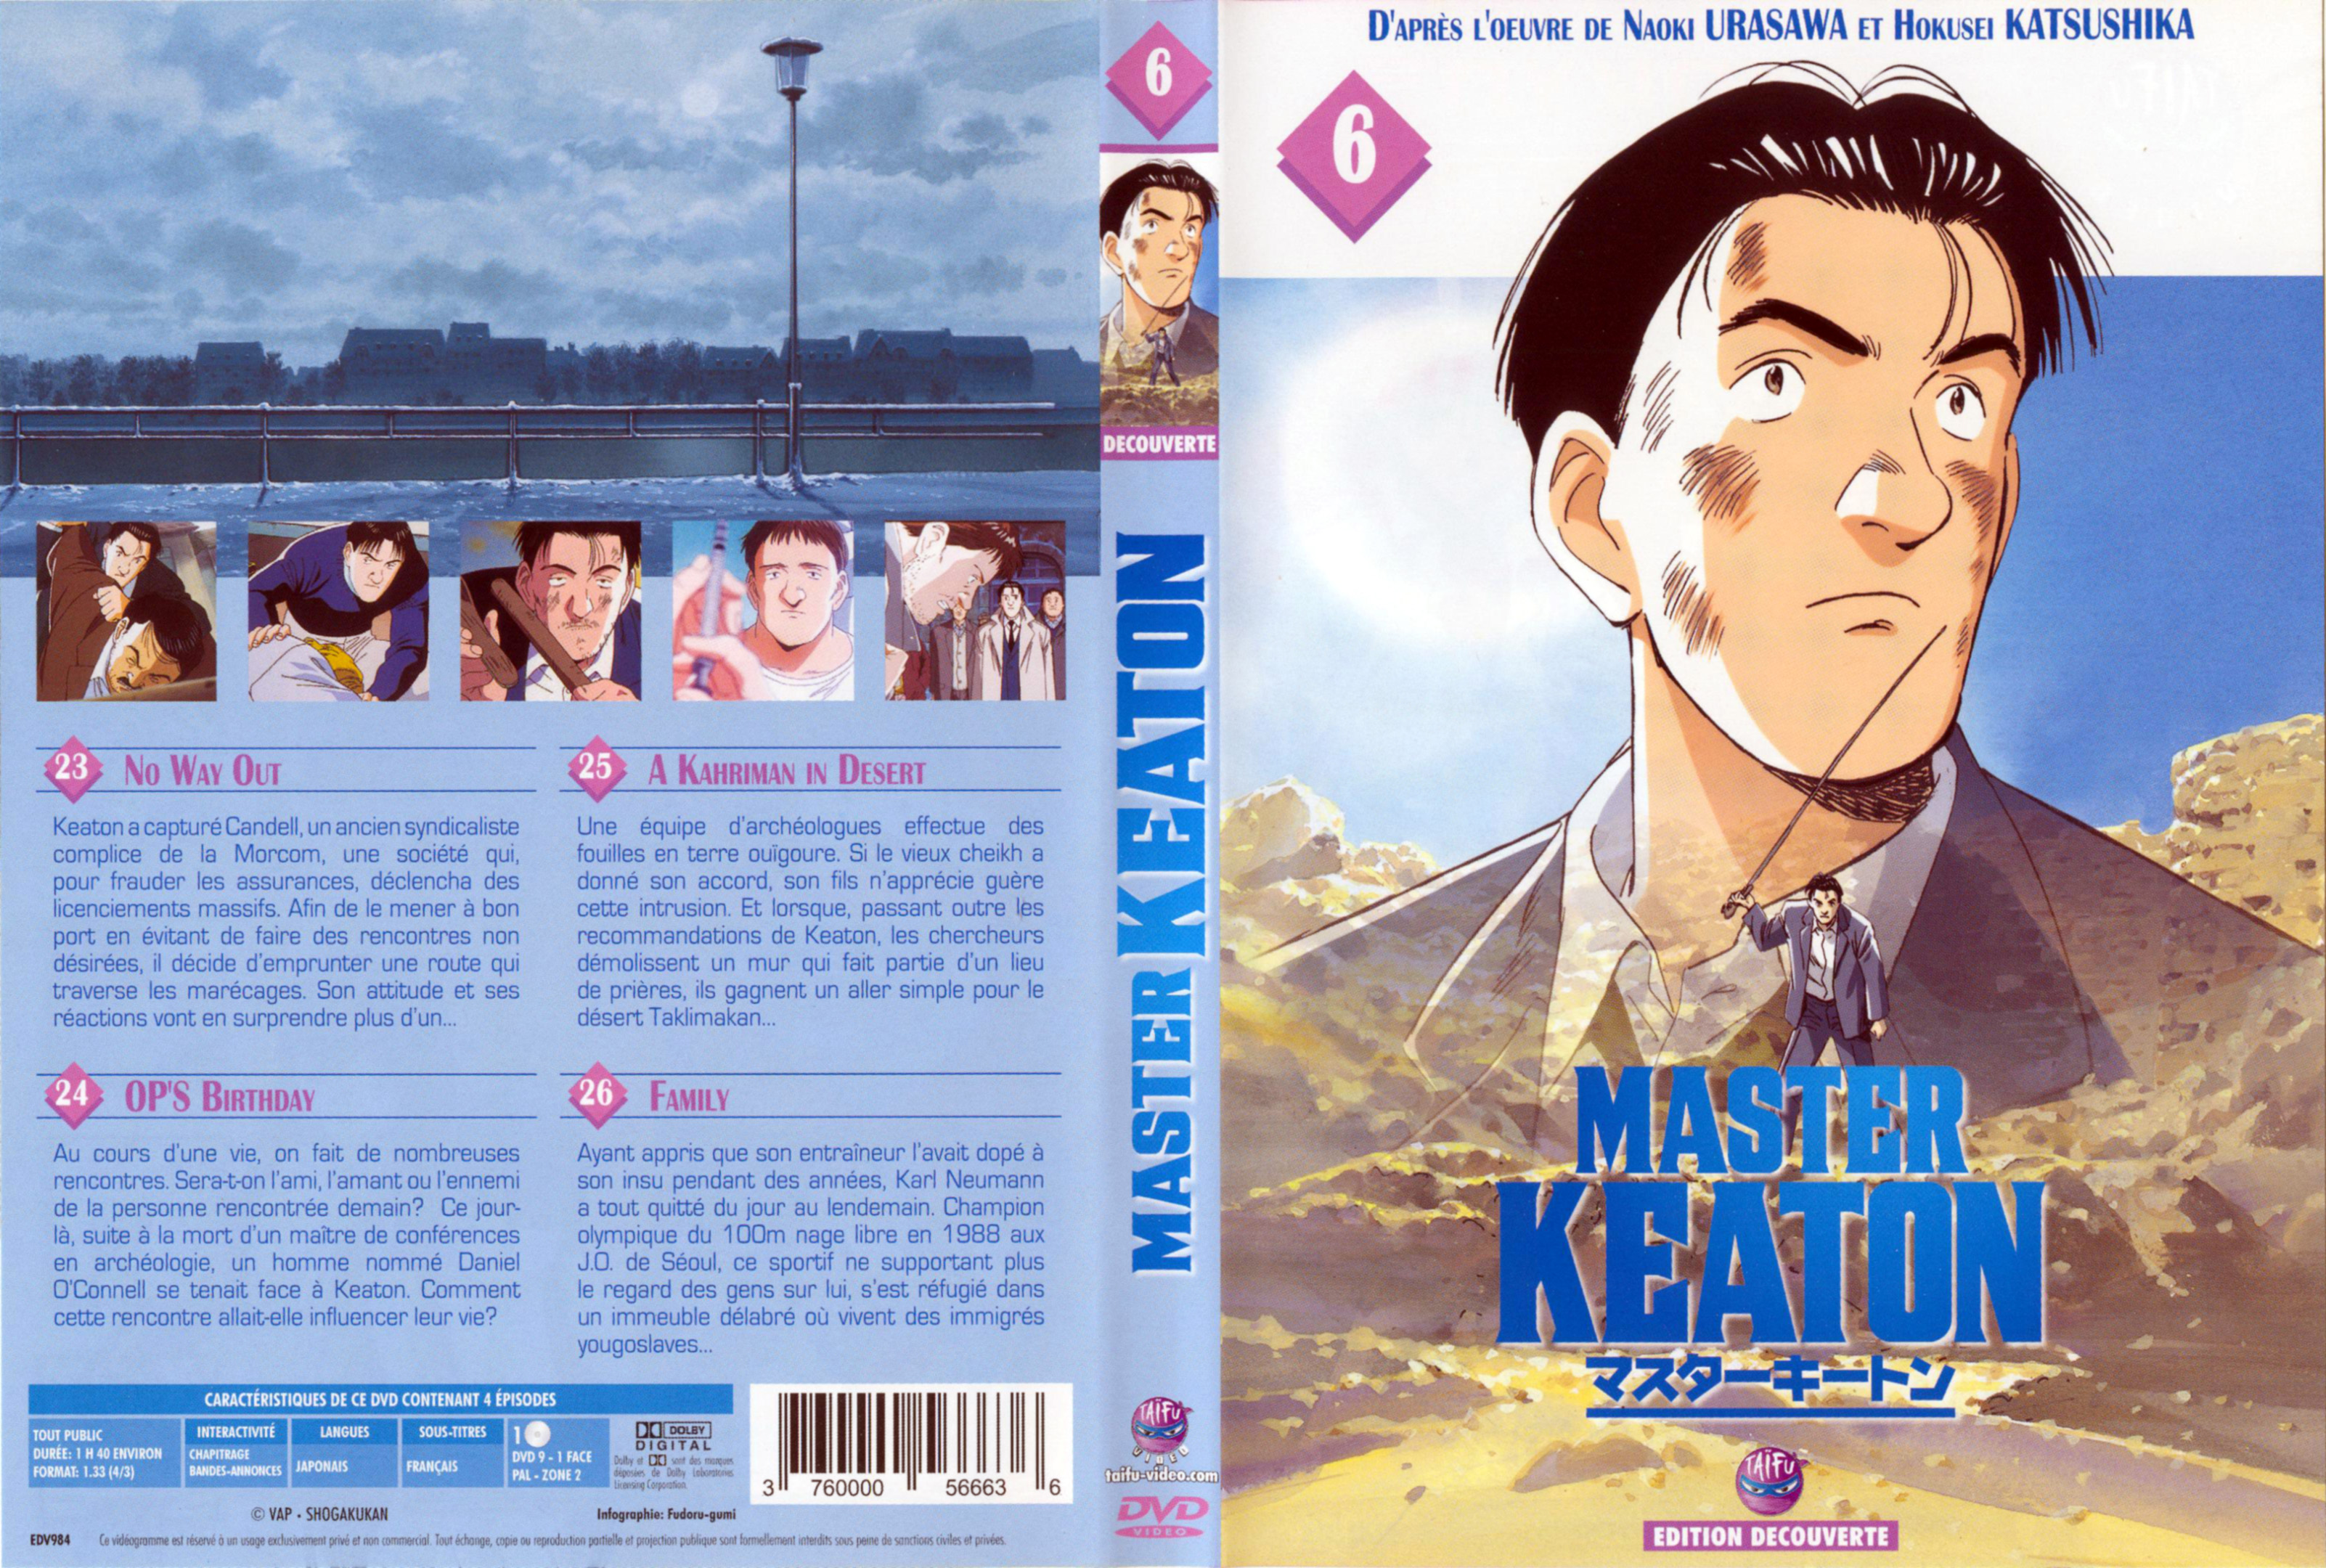 Jaquette DVD Master Keaton vol 06